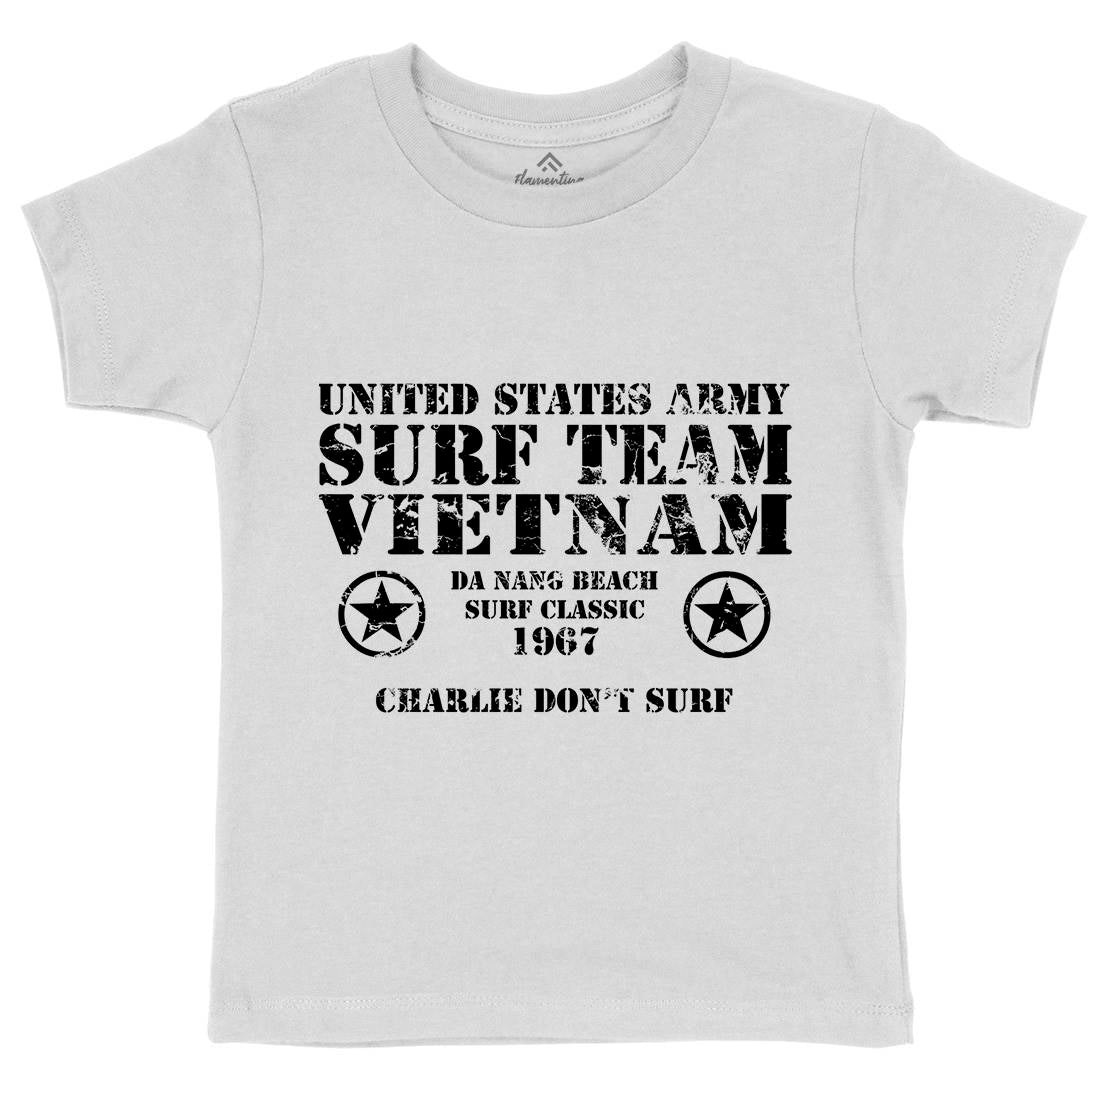 Surf Team Vietnam Kids Crew Neck T-Shirt Army D438